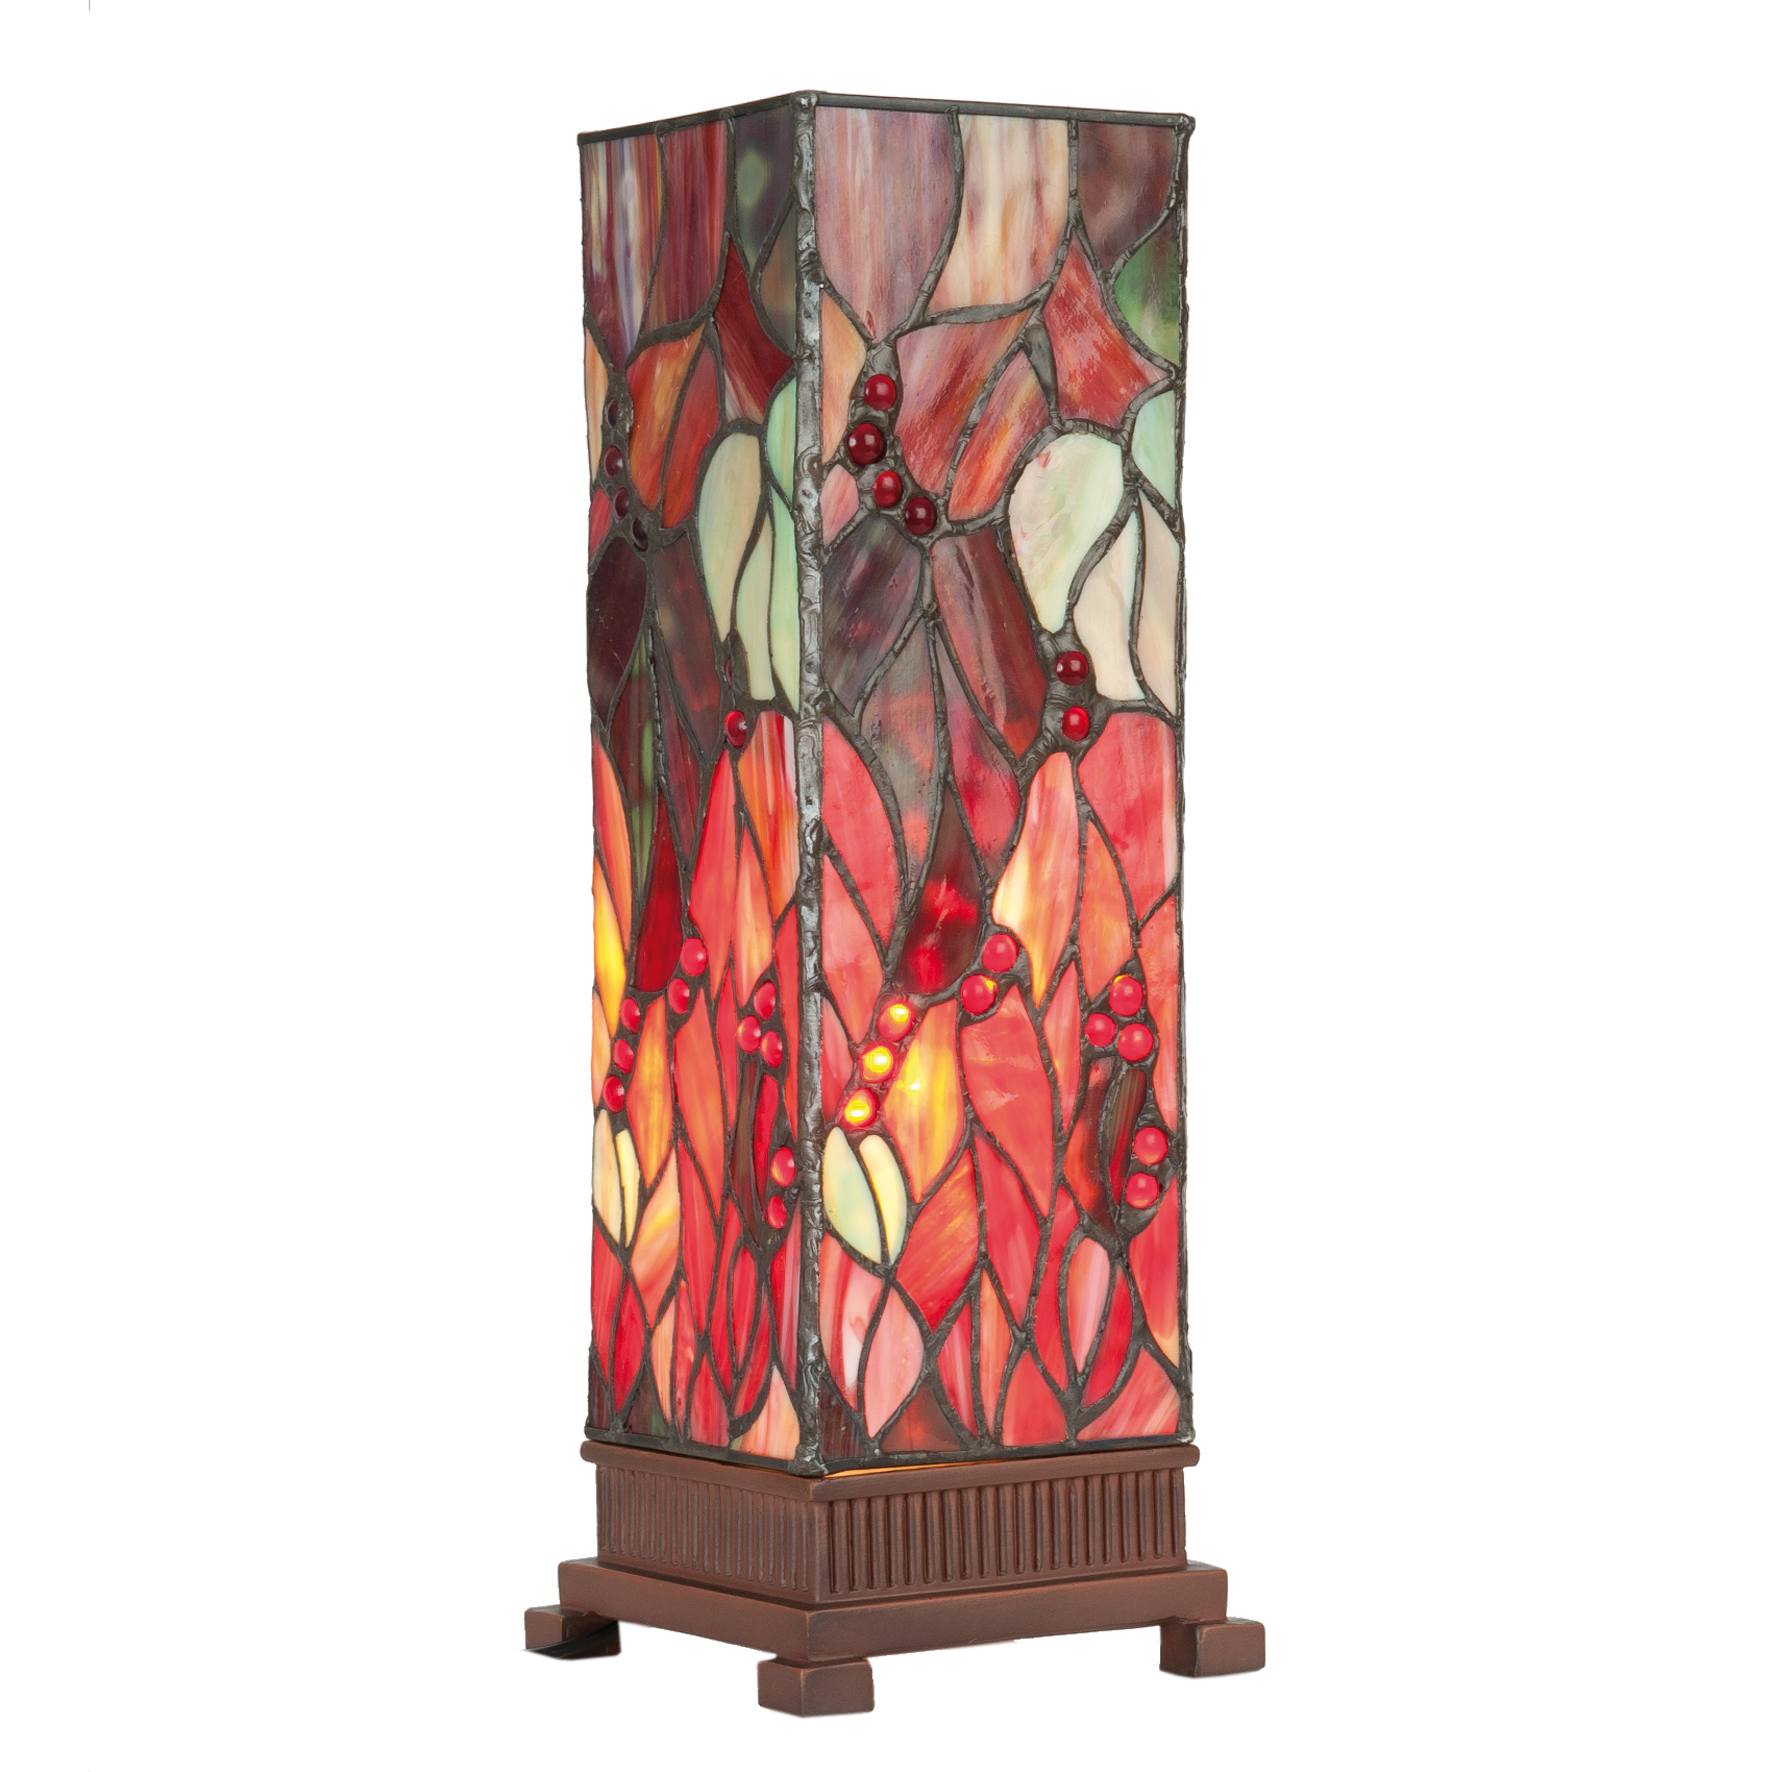 Tiffany Tischlampe Lampe Wildflower 0,35 m